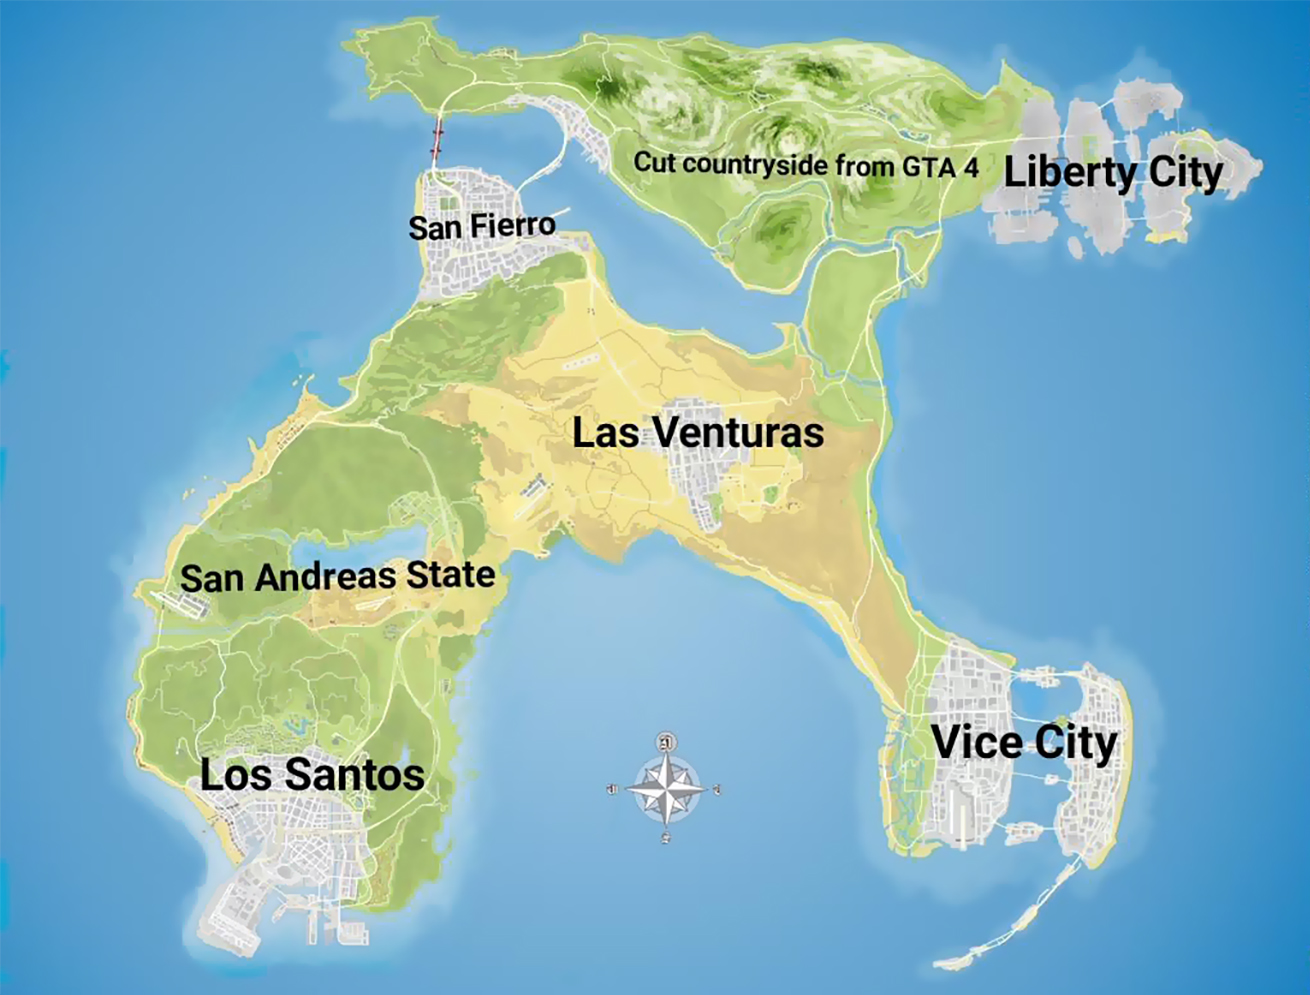 Gta 6 World Concept Map Games Mapsland Maps Of The World - Vrogue